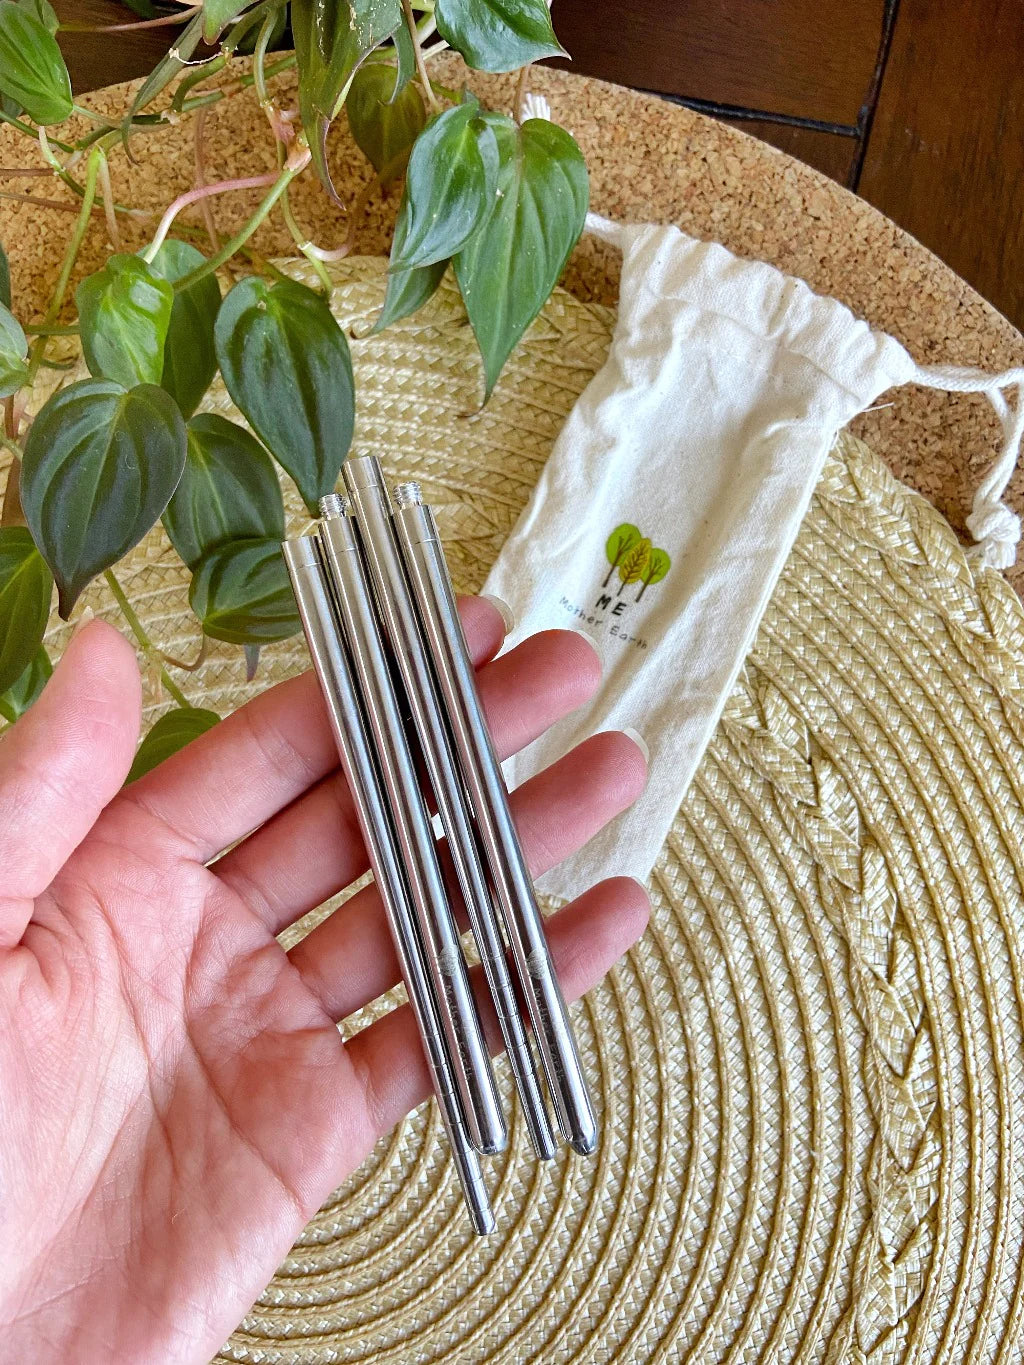 Chopsticks - Compact for Travel